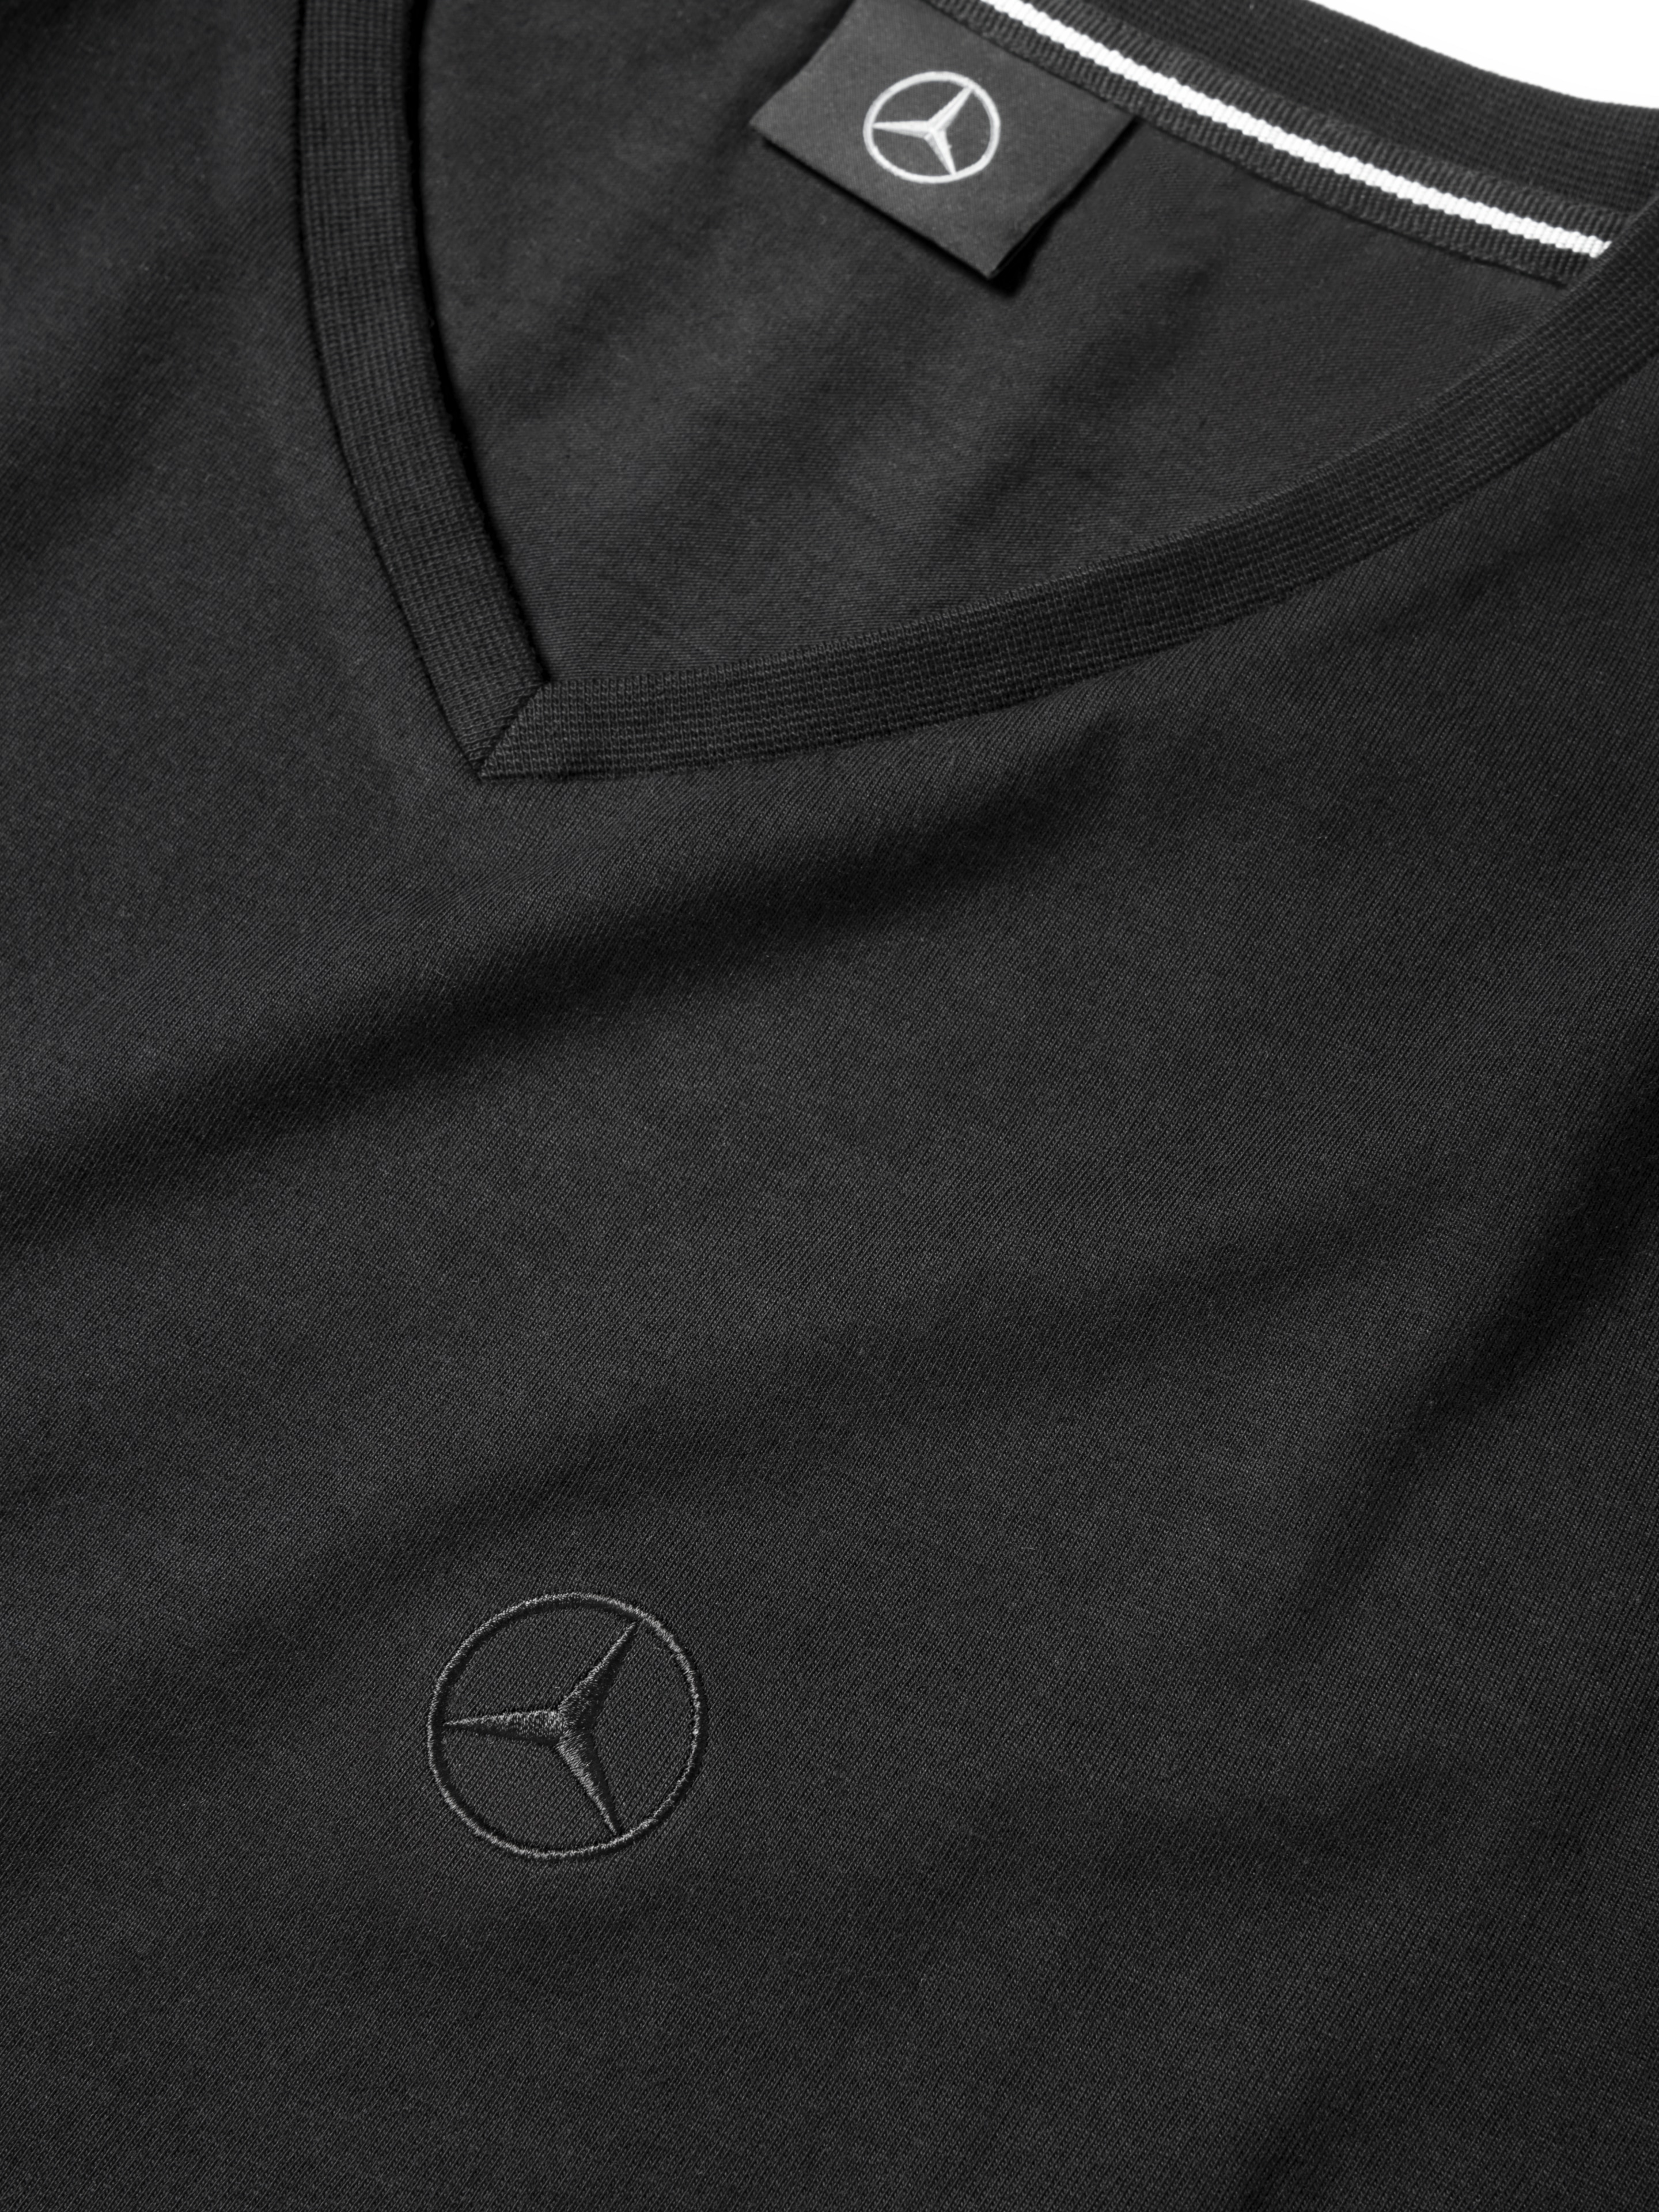 T-Shirt Herren - schwarz, XXL